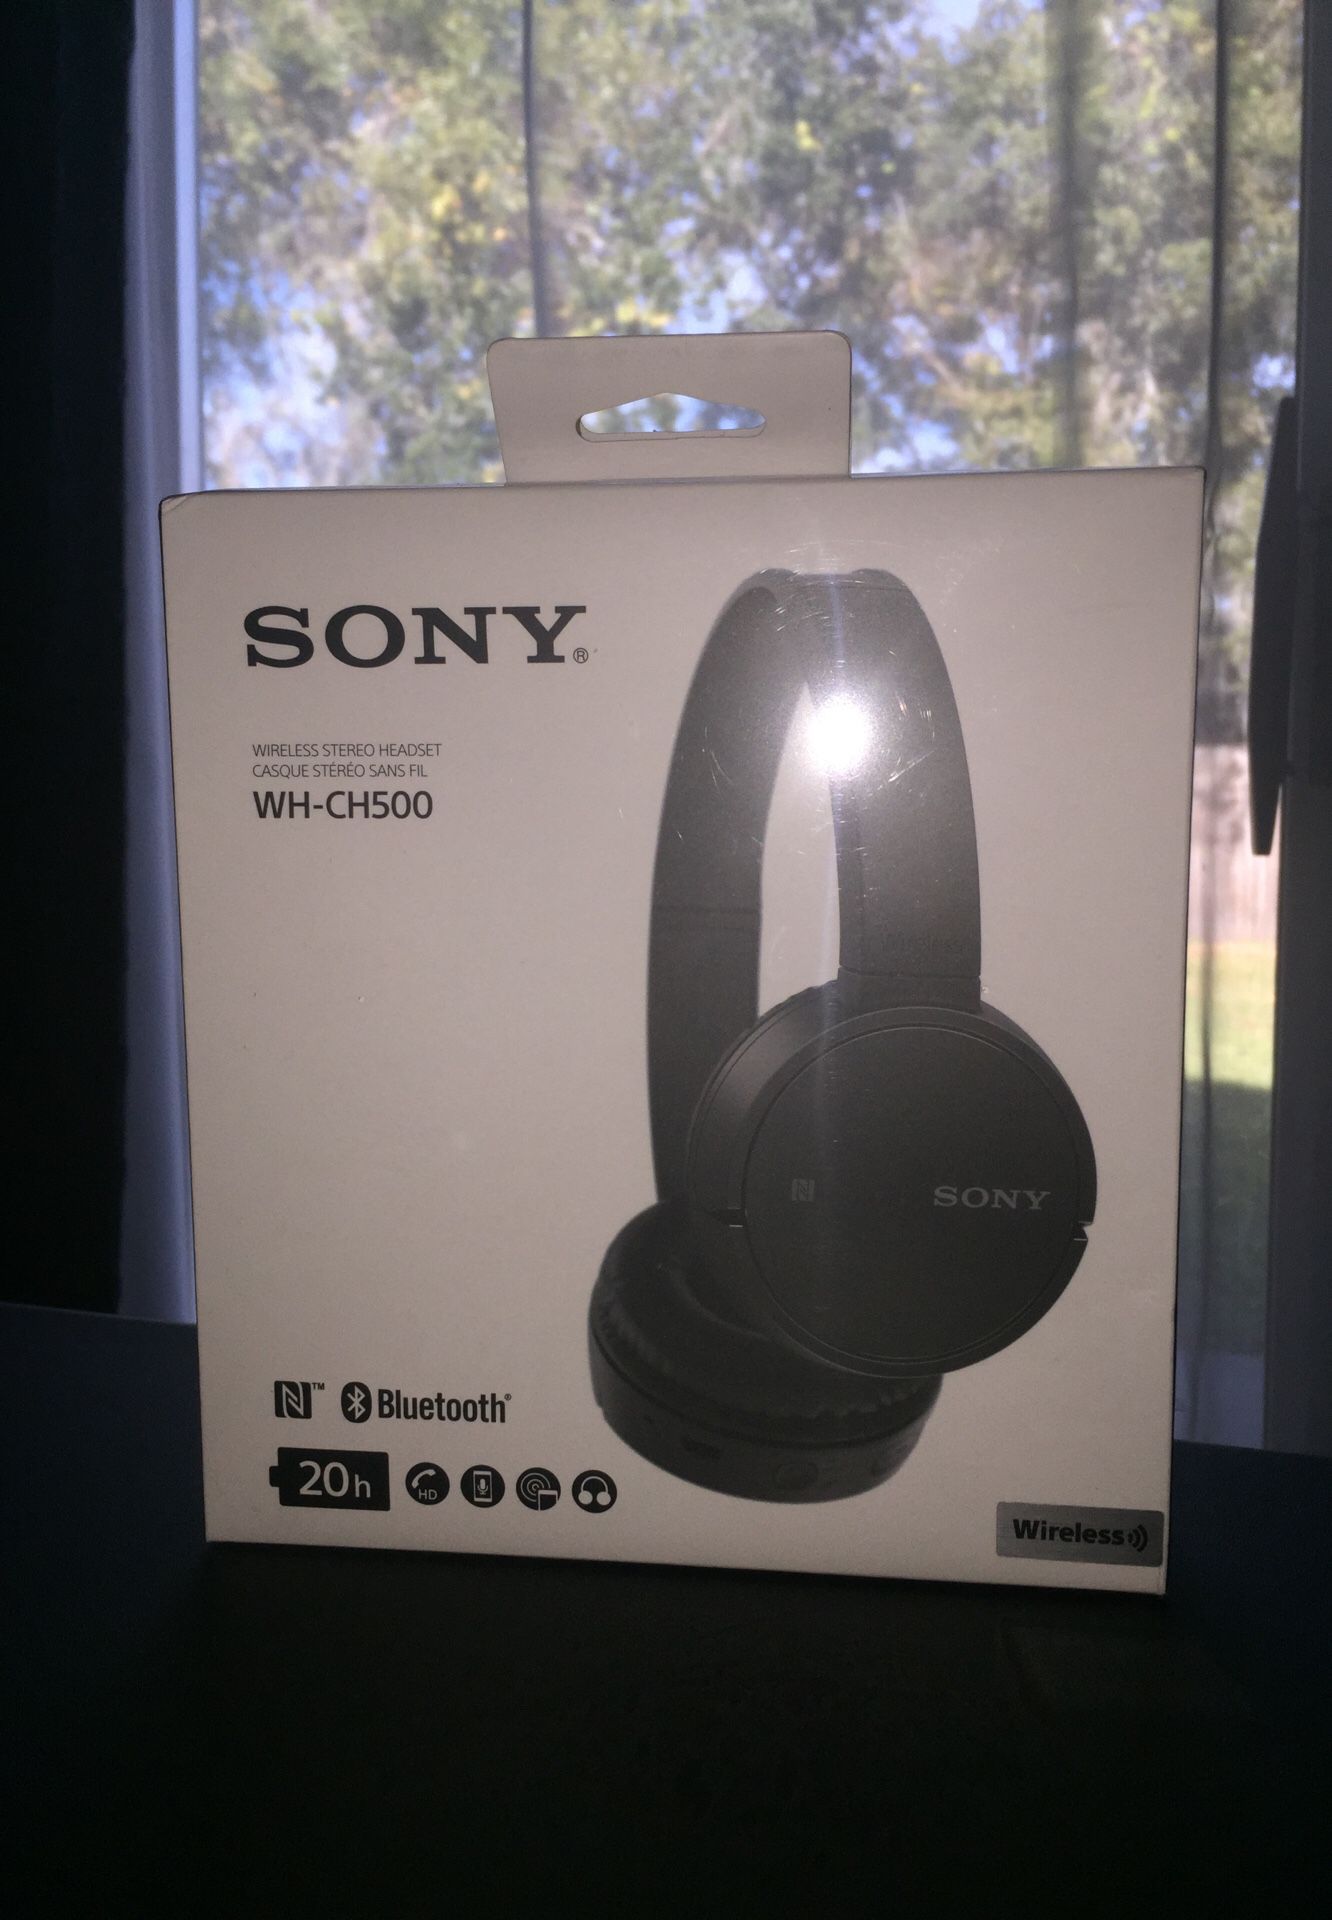 Sony WH-CH500 wireless headset